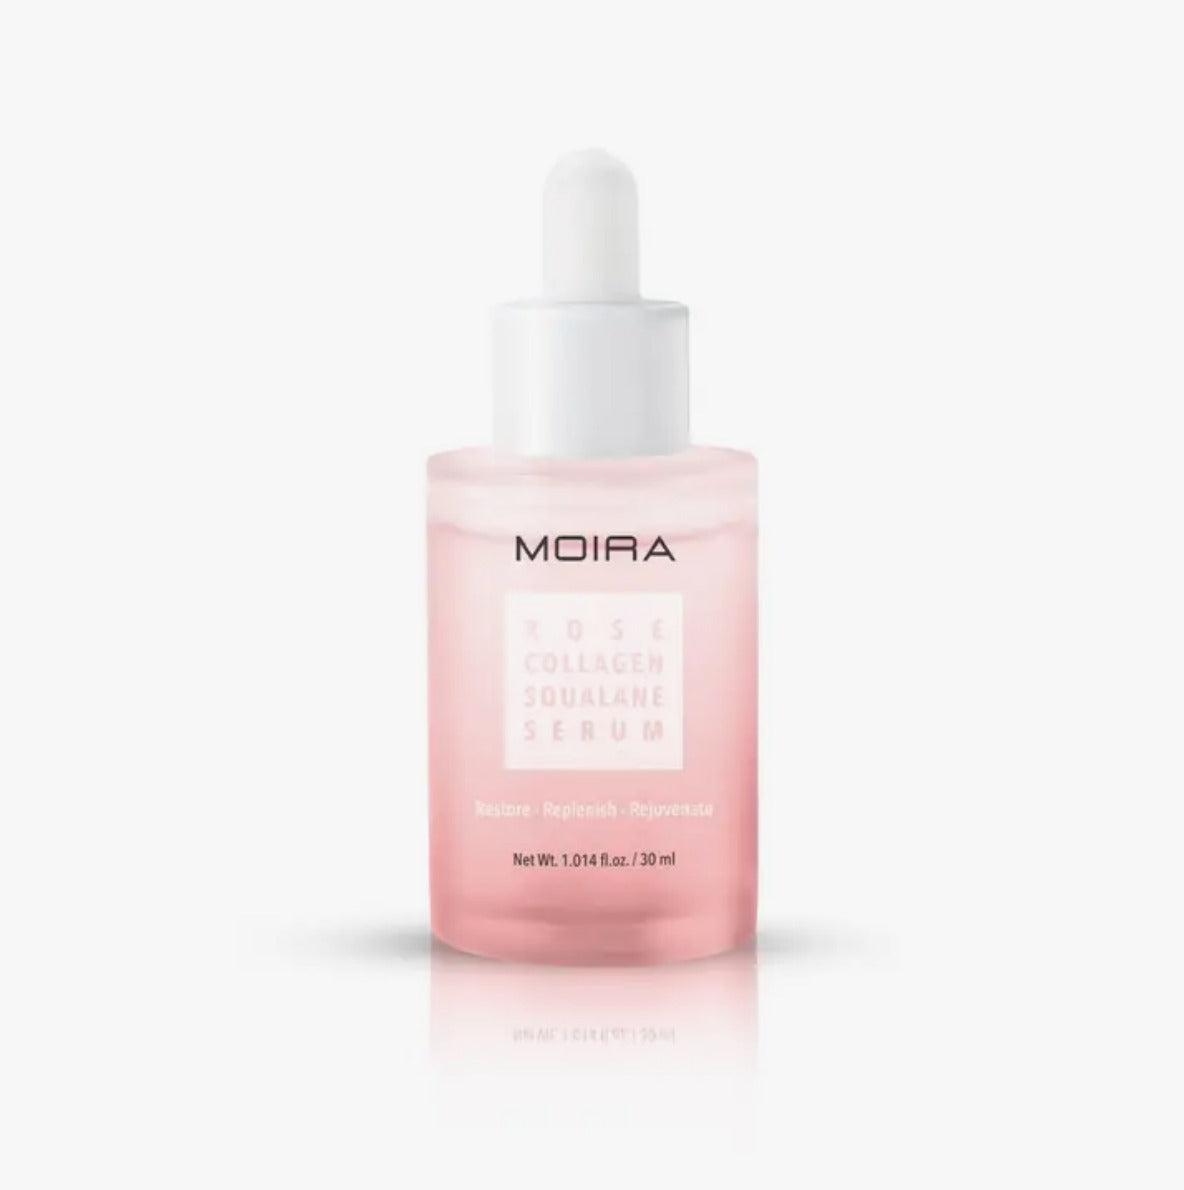 Moira Cosmetics, Rose Collagen Squalane Eye Cream, Korean Cosmetic